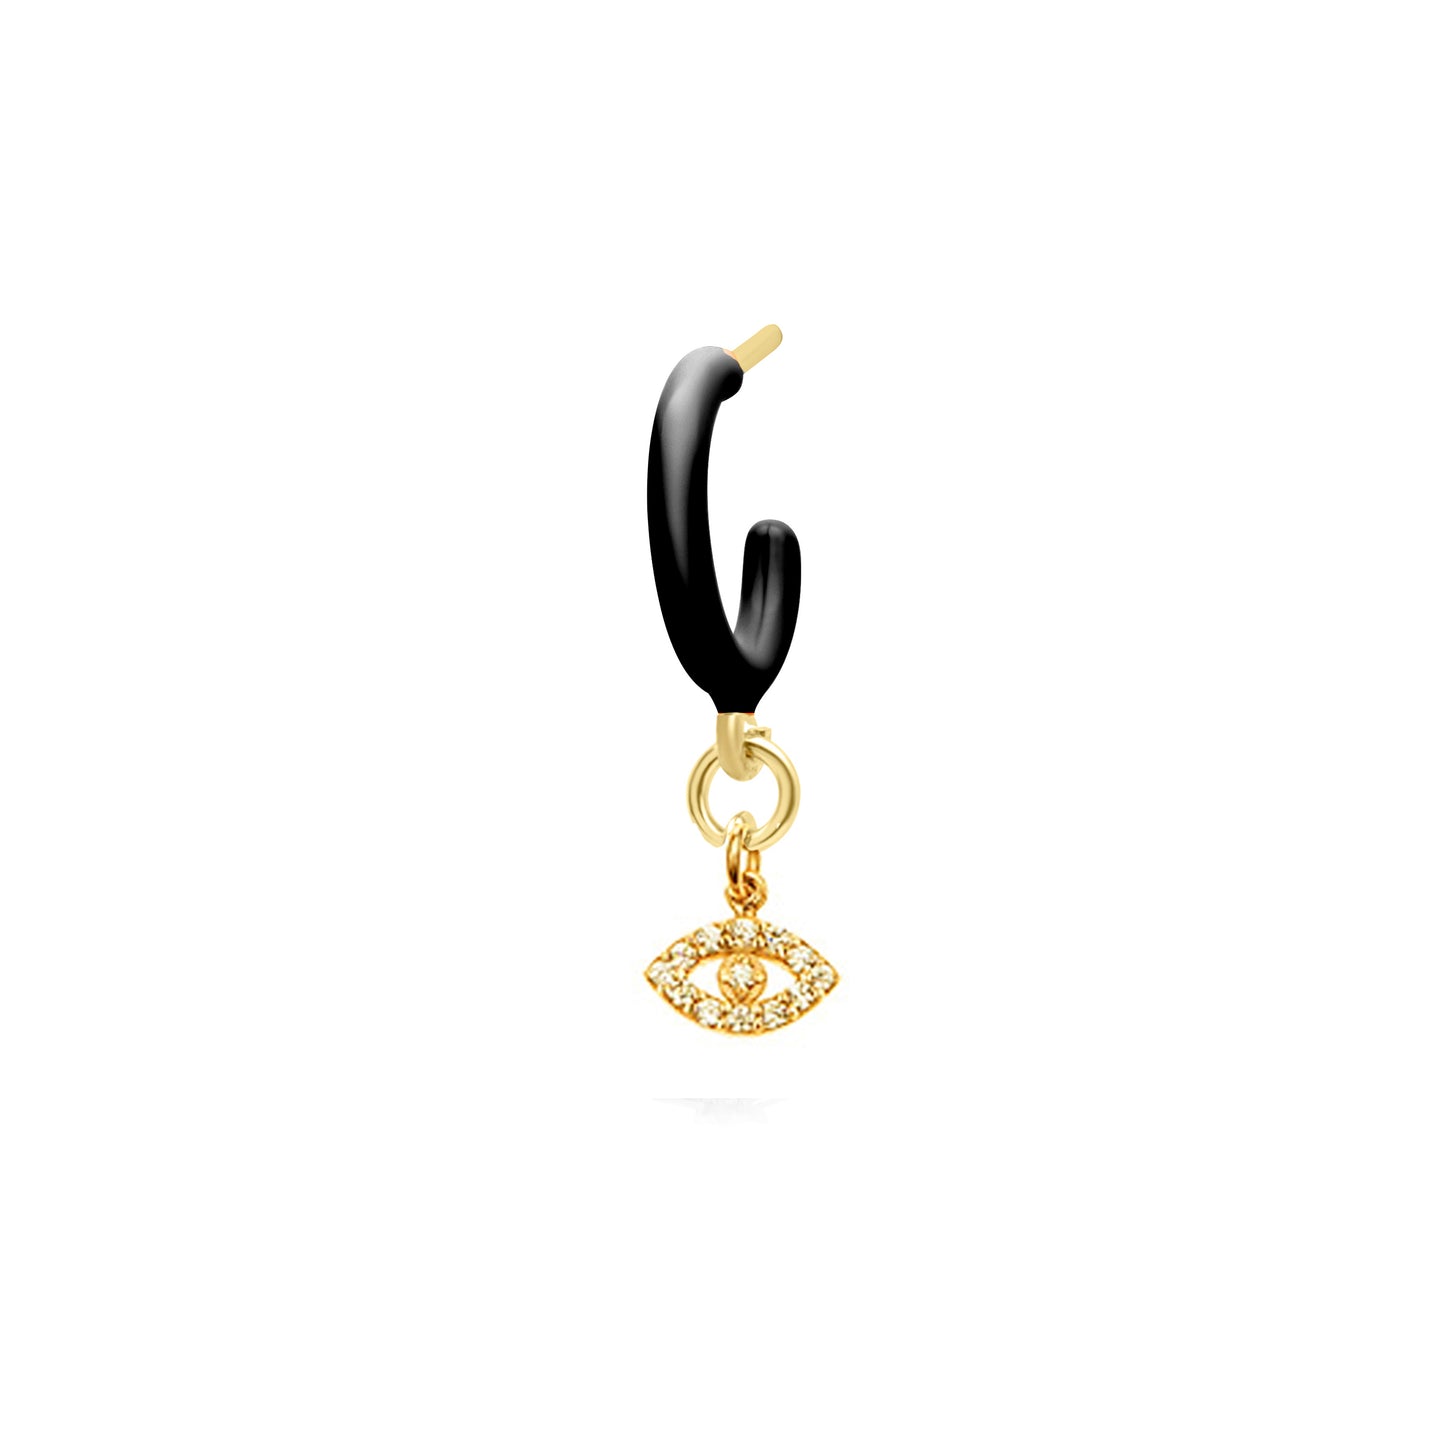 Black Enamel Hoop with Eye Single Earring - Gold Plated